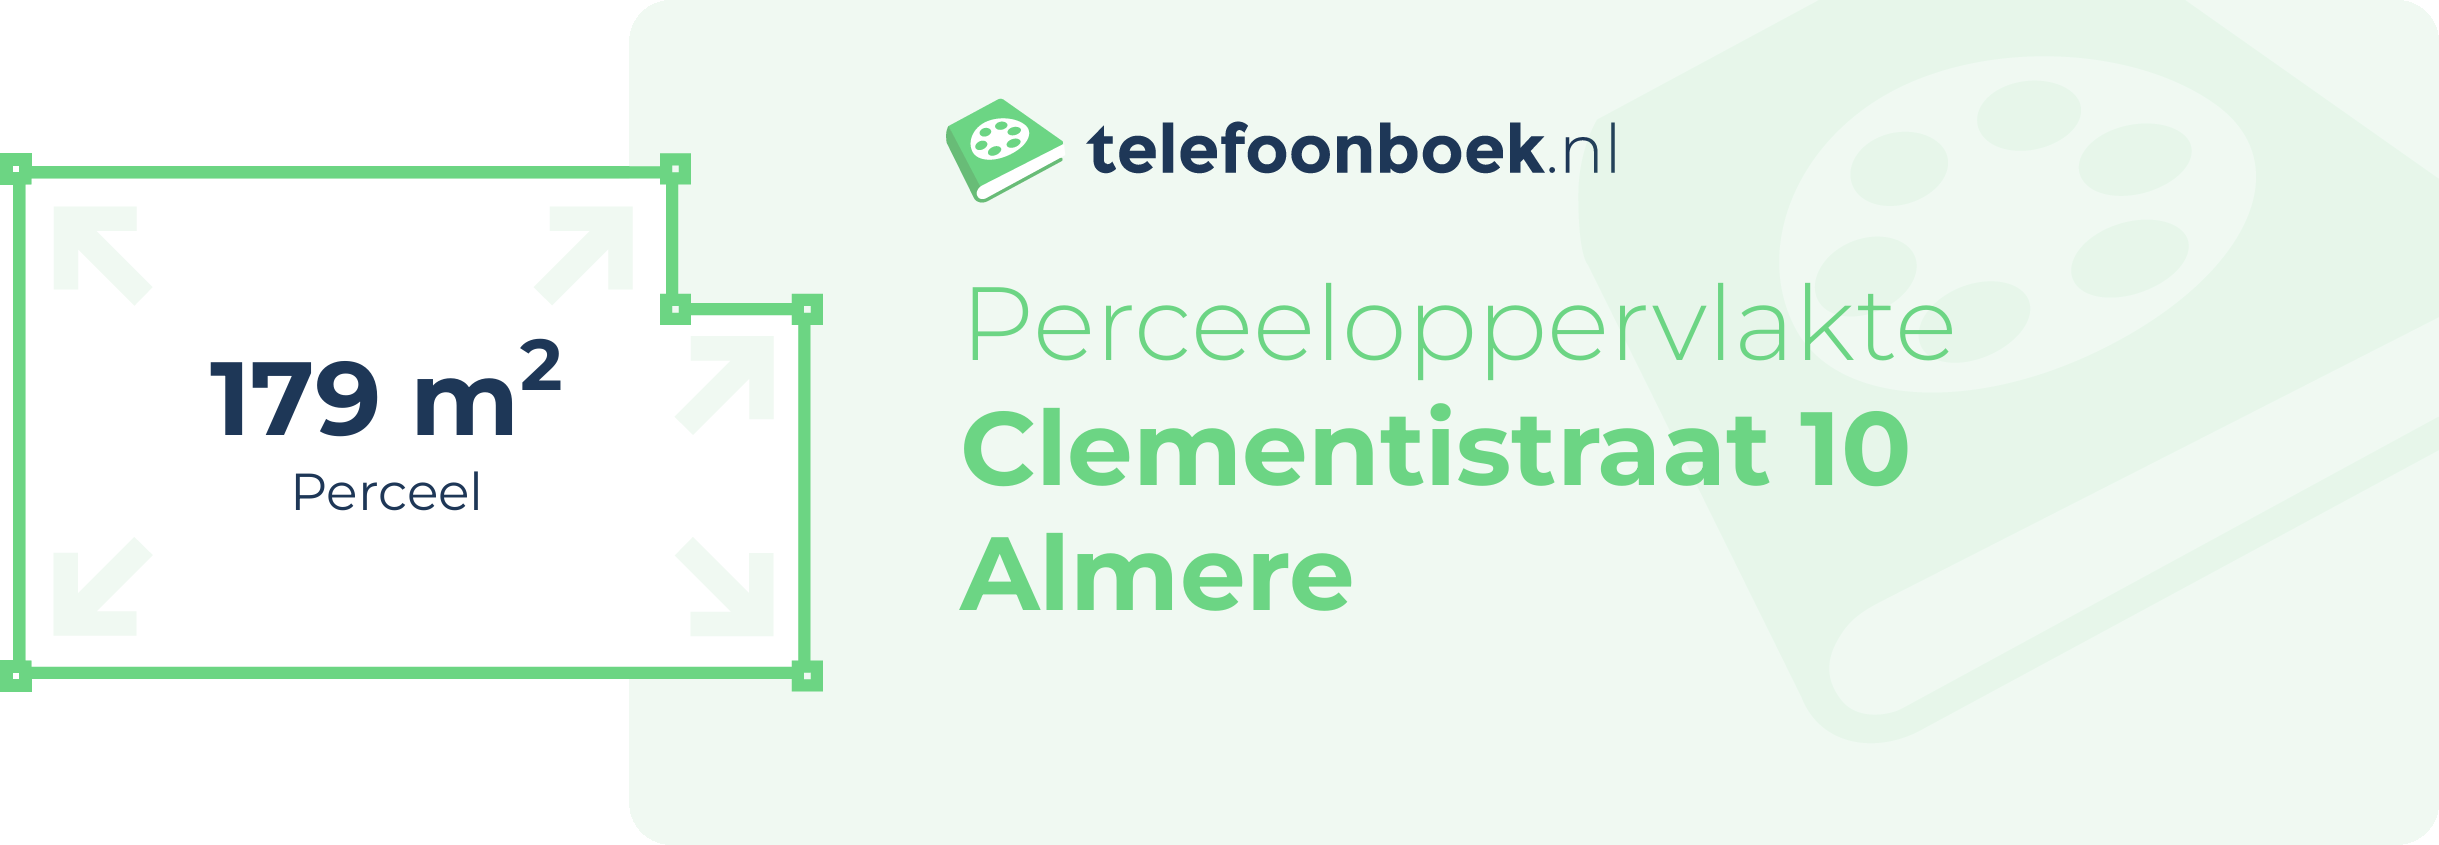 Perceeloppervlakte Clementistraat 10 Almere